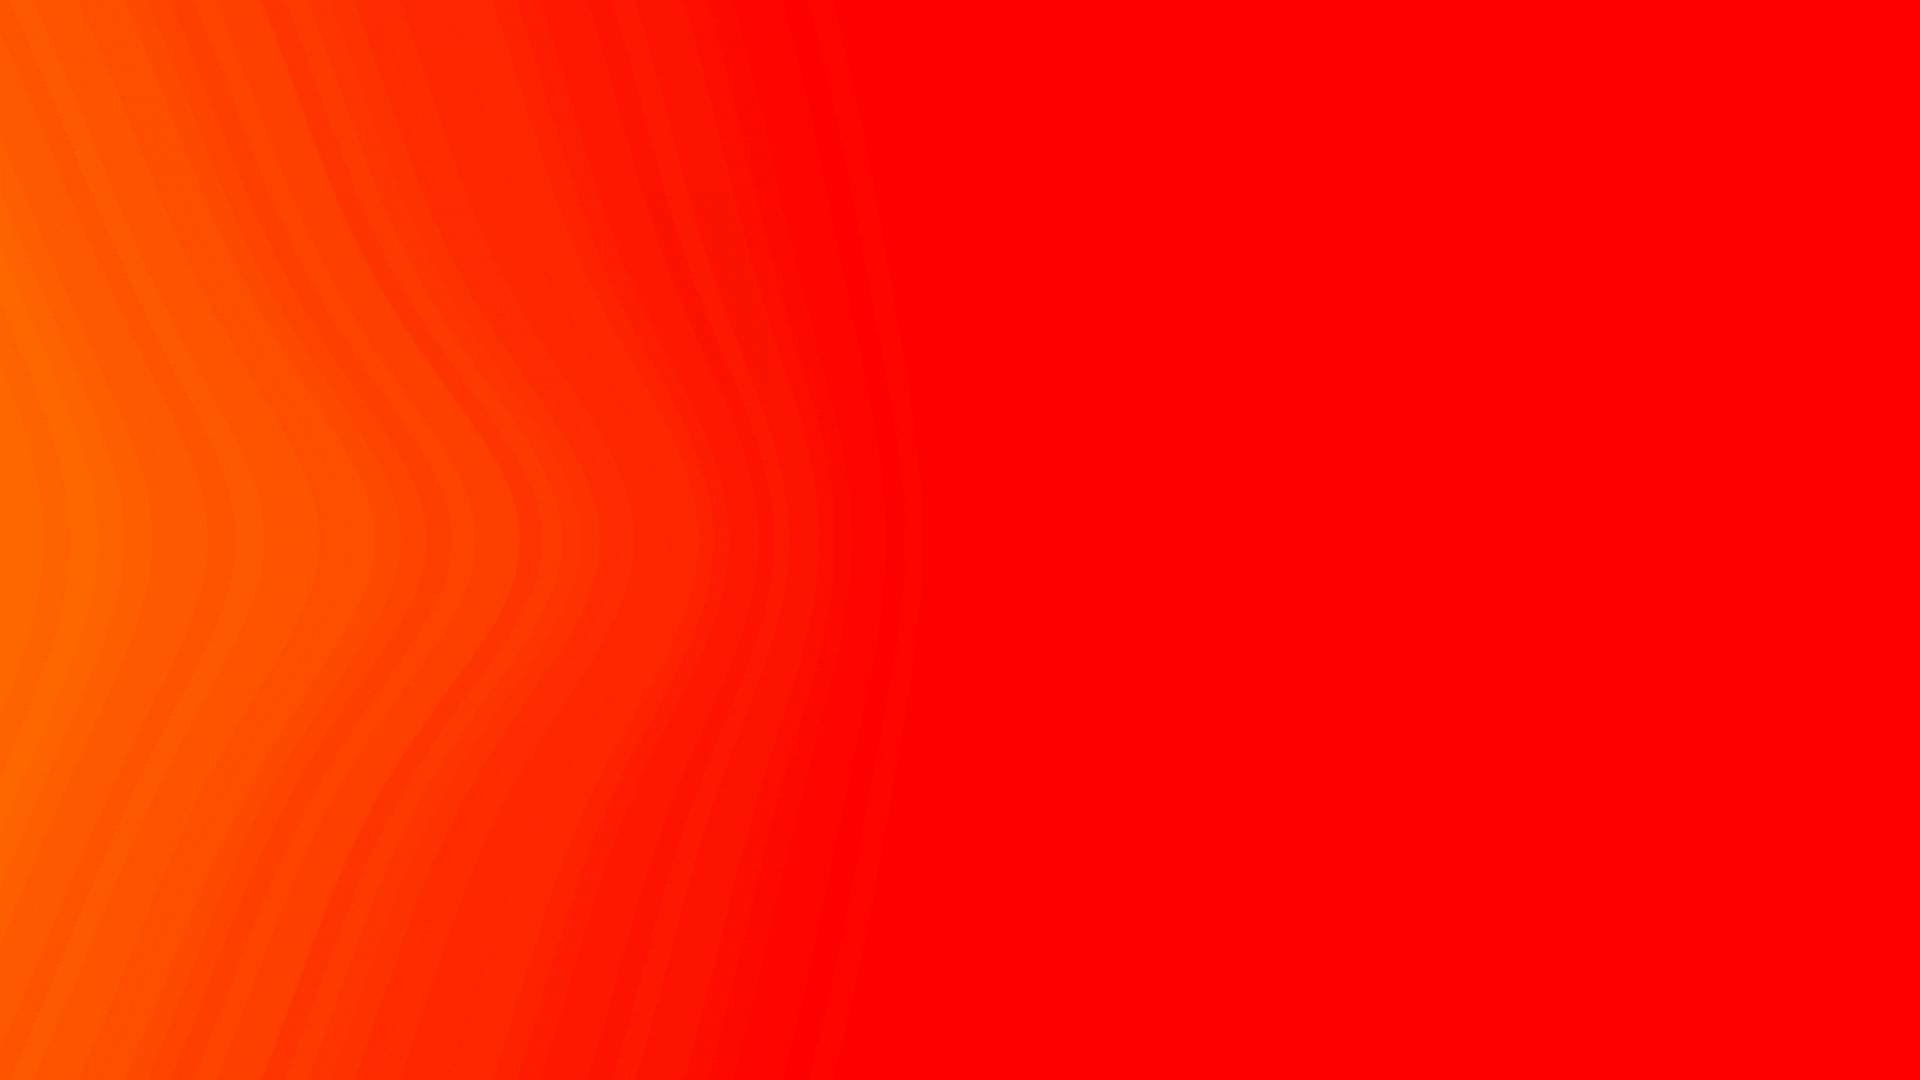 Red Background Images For Websites